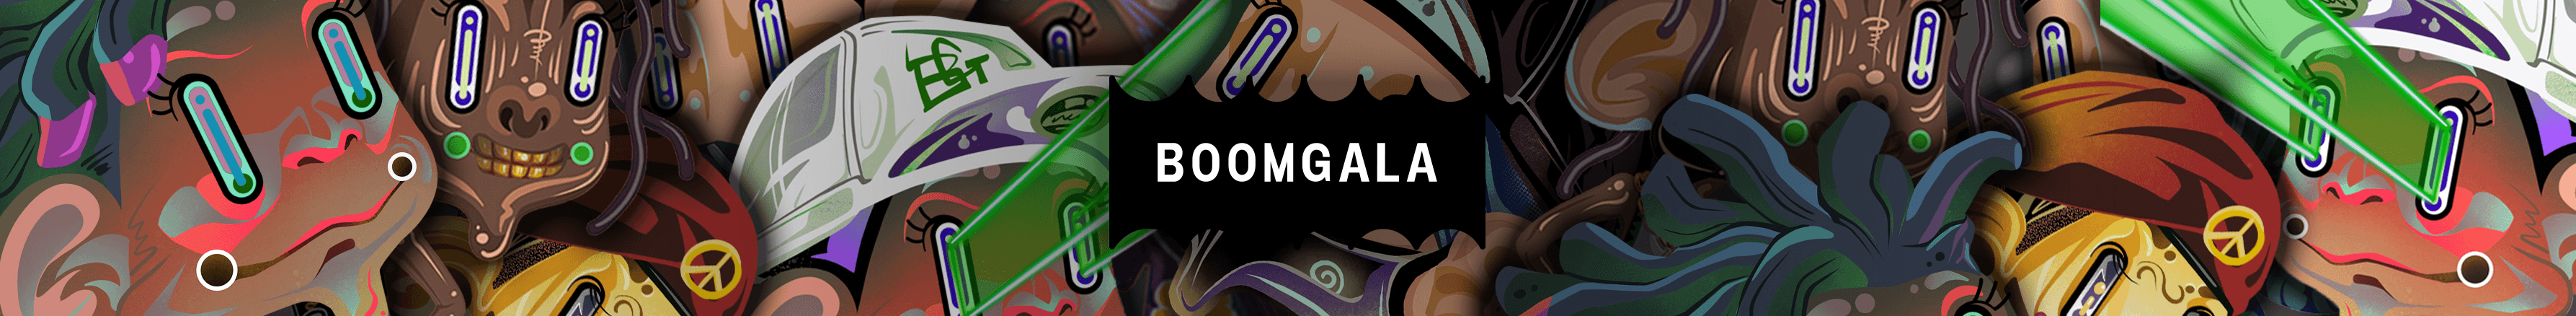 BoomGala banner